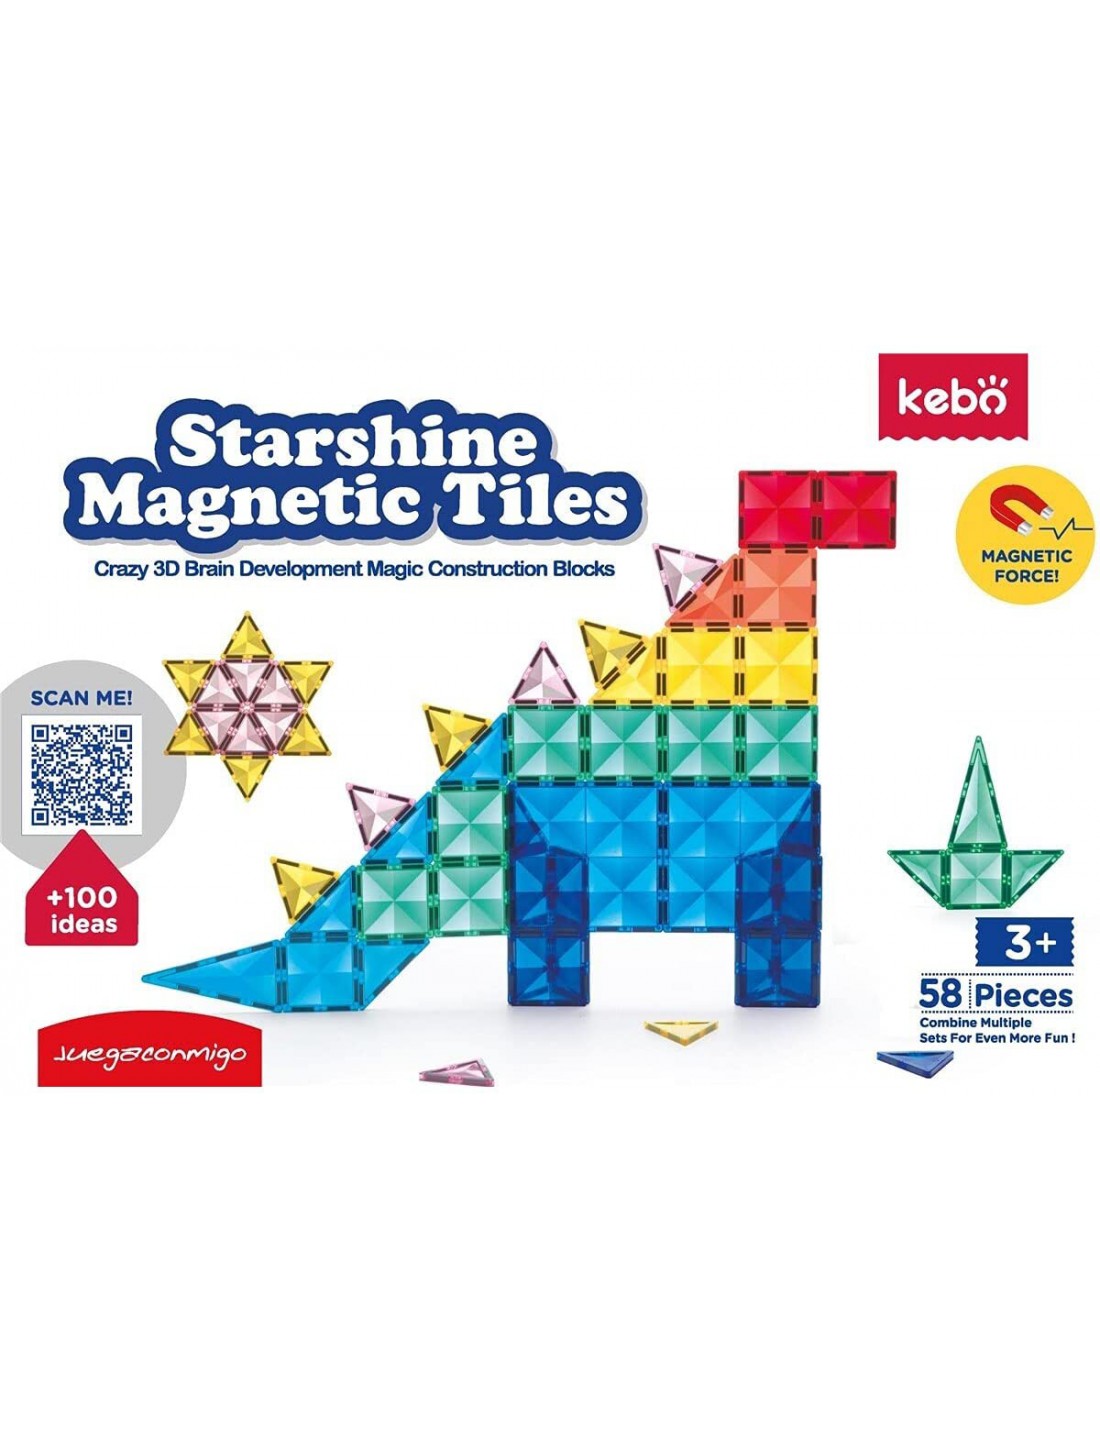 Starshine Magnetic Tiles - 58 piezas. Kebo